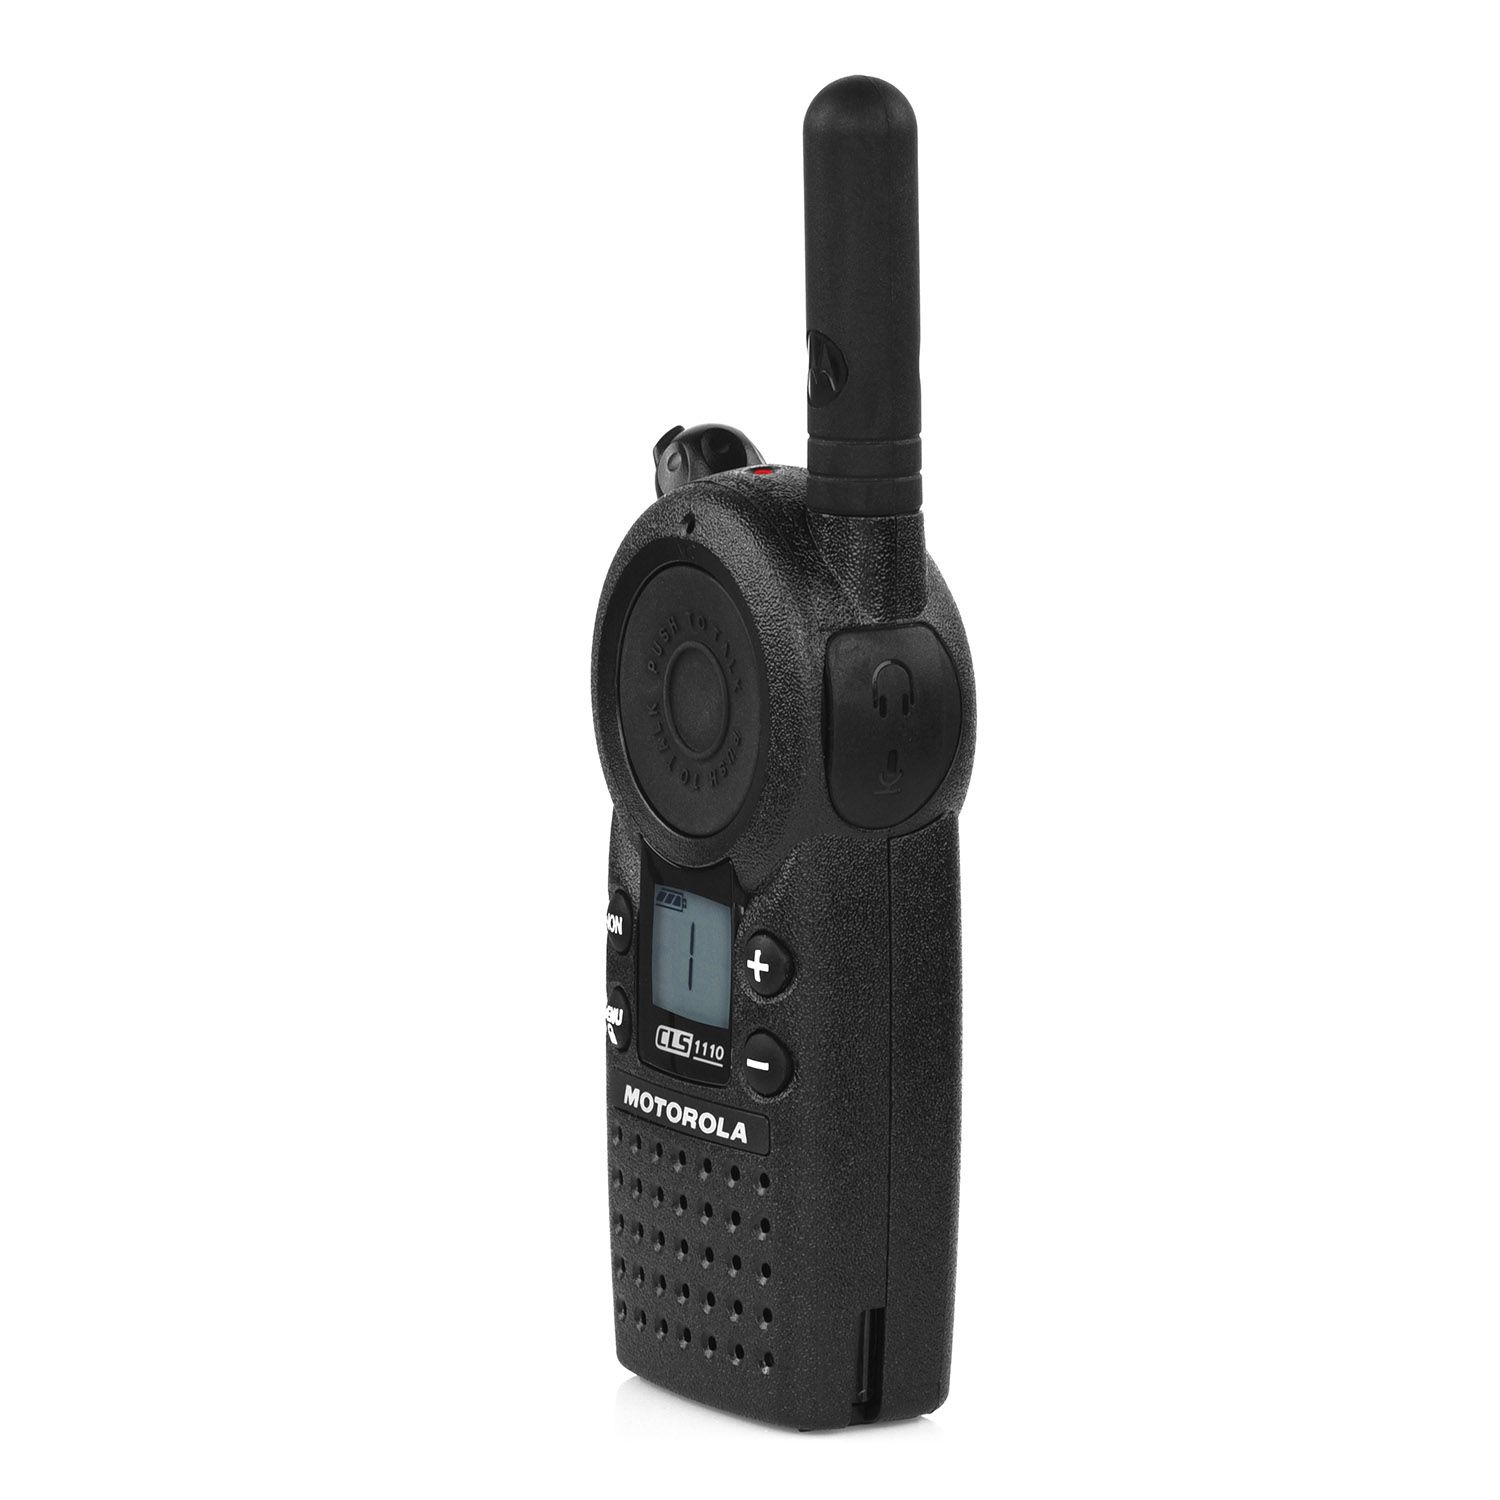 Motorola-CLS1110 Business Two-Way Radio, watt Channel 56 Frequency, UHF 